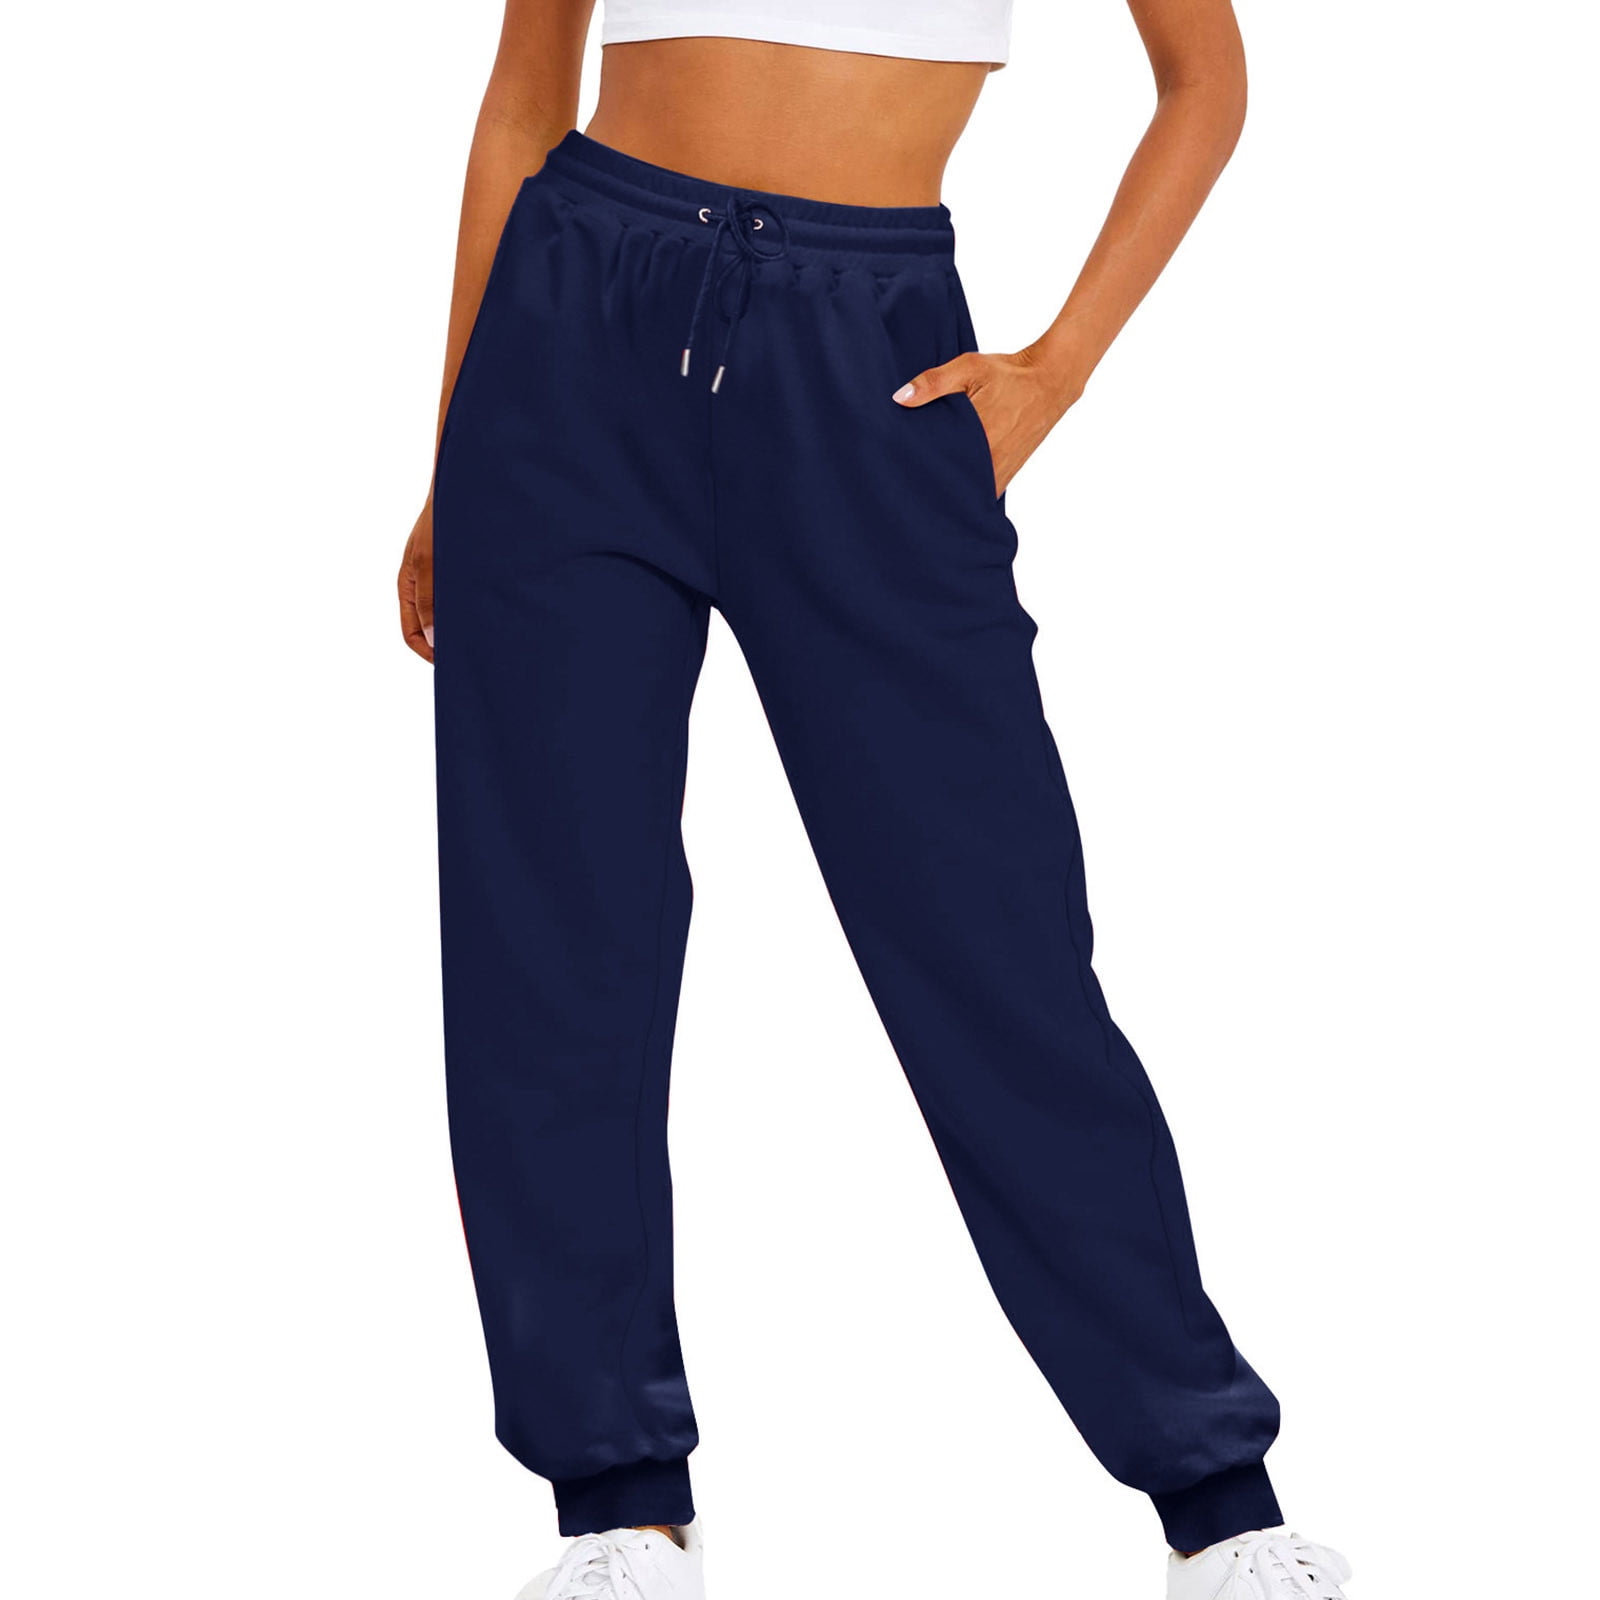 Athletic Works Women's Dri More Core Athleisure Bootcut Yoga Pants, 32  Inseam for Regular, Sizes S Petite-2XL - Walmart.com